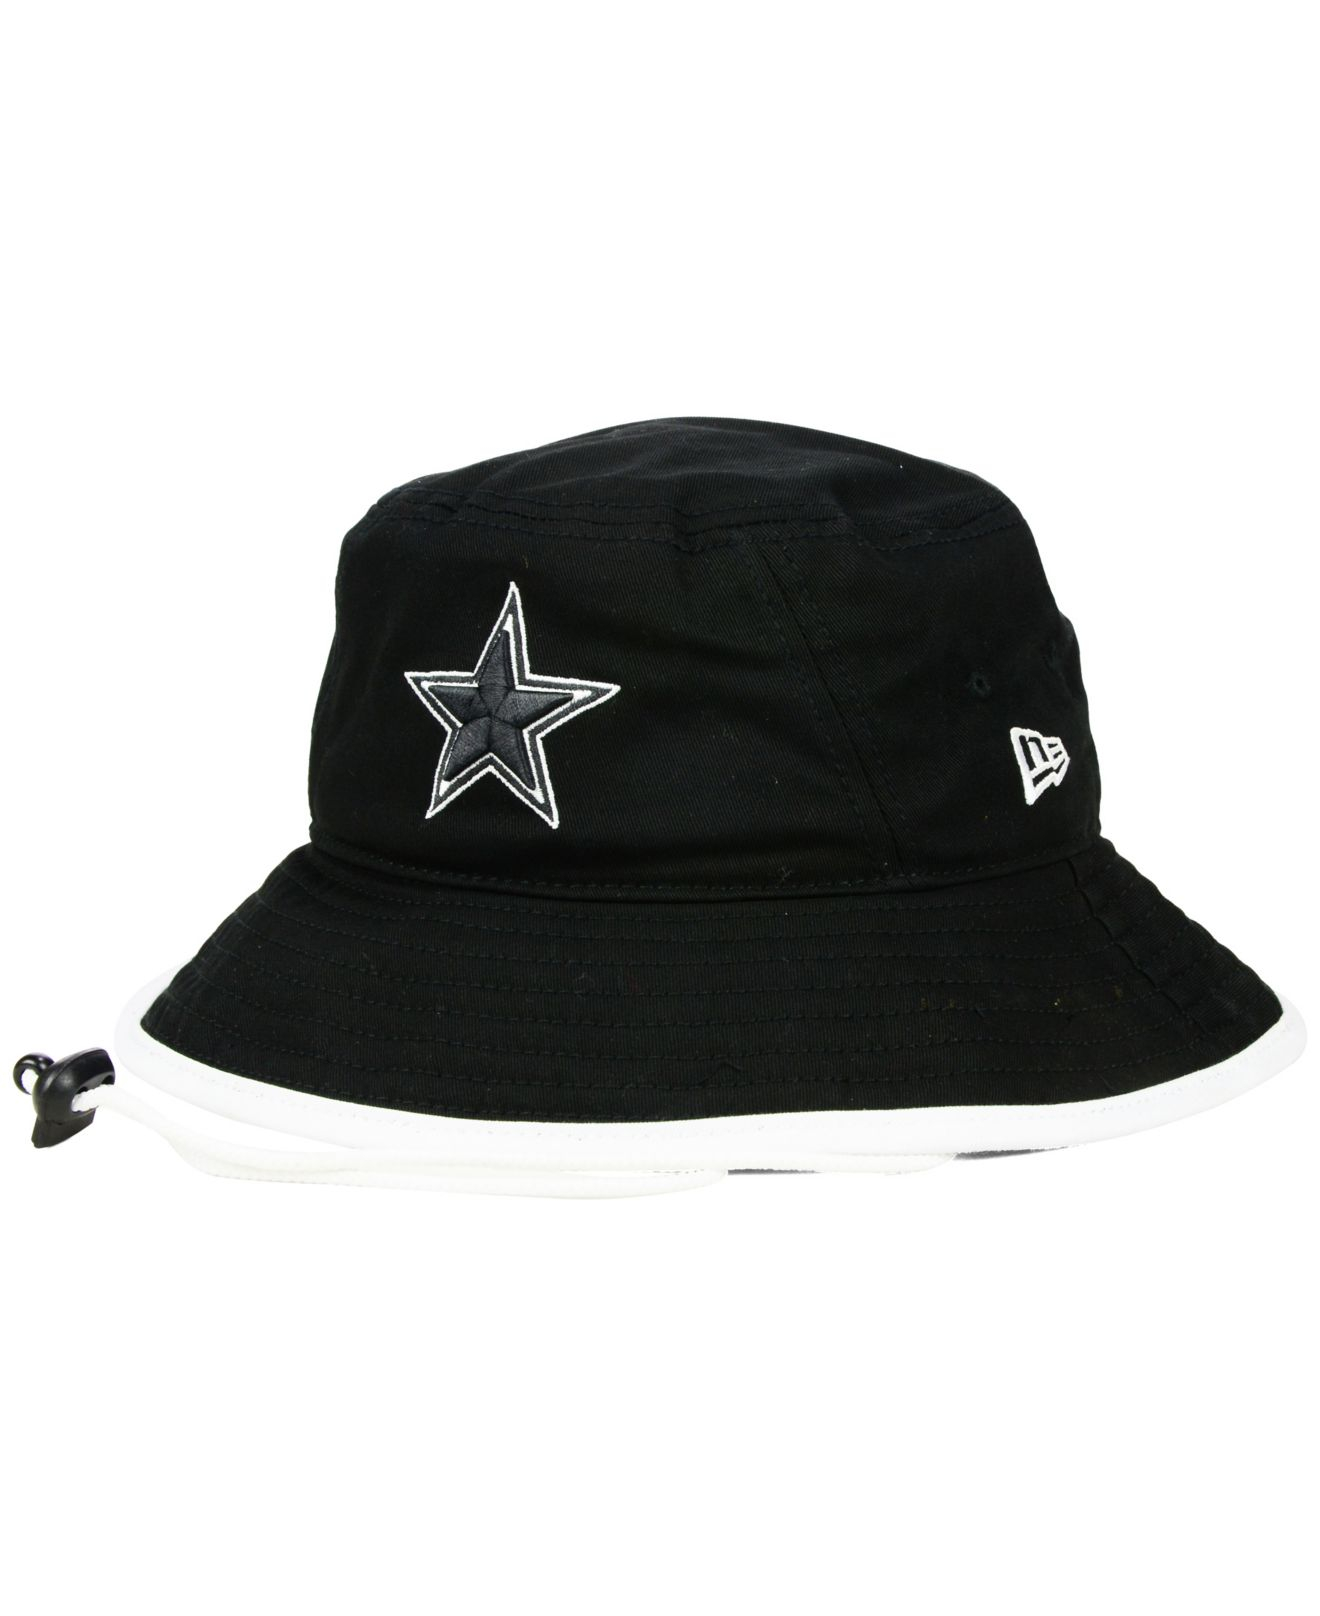 KTZ Dallas Cowboys Black White Bucket Hat for Men - Lyst